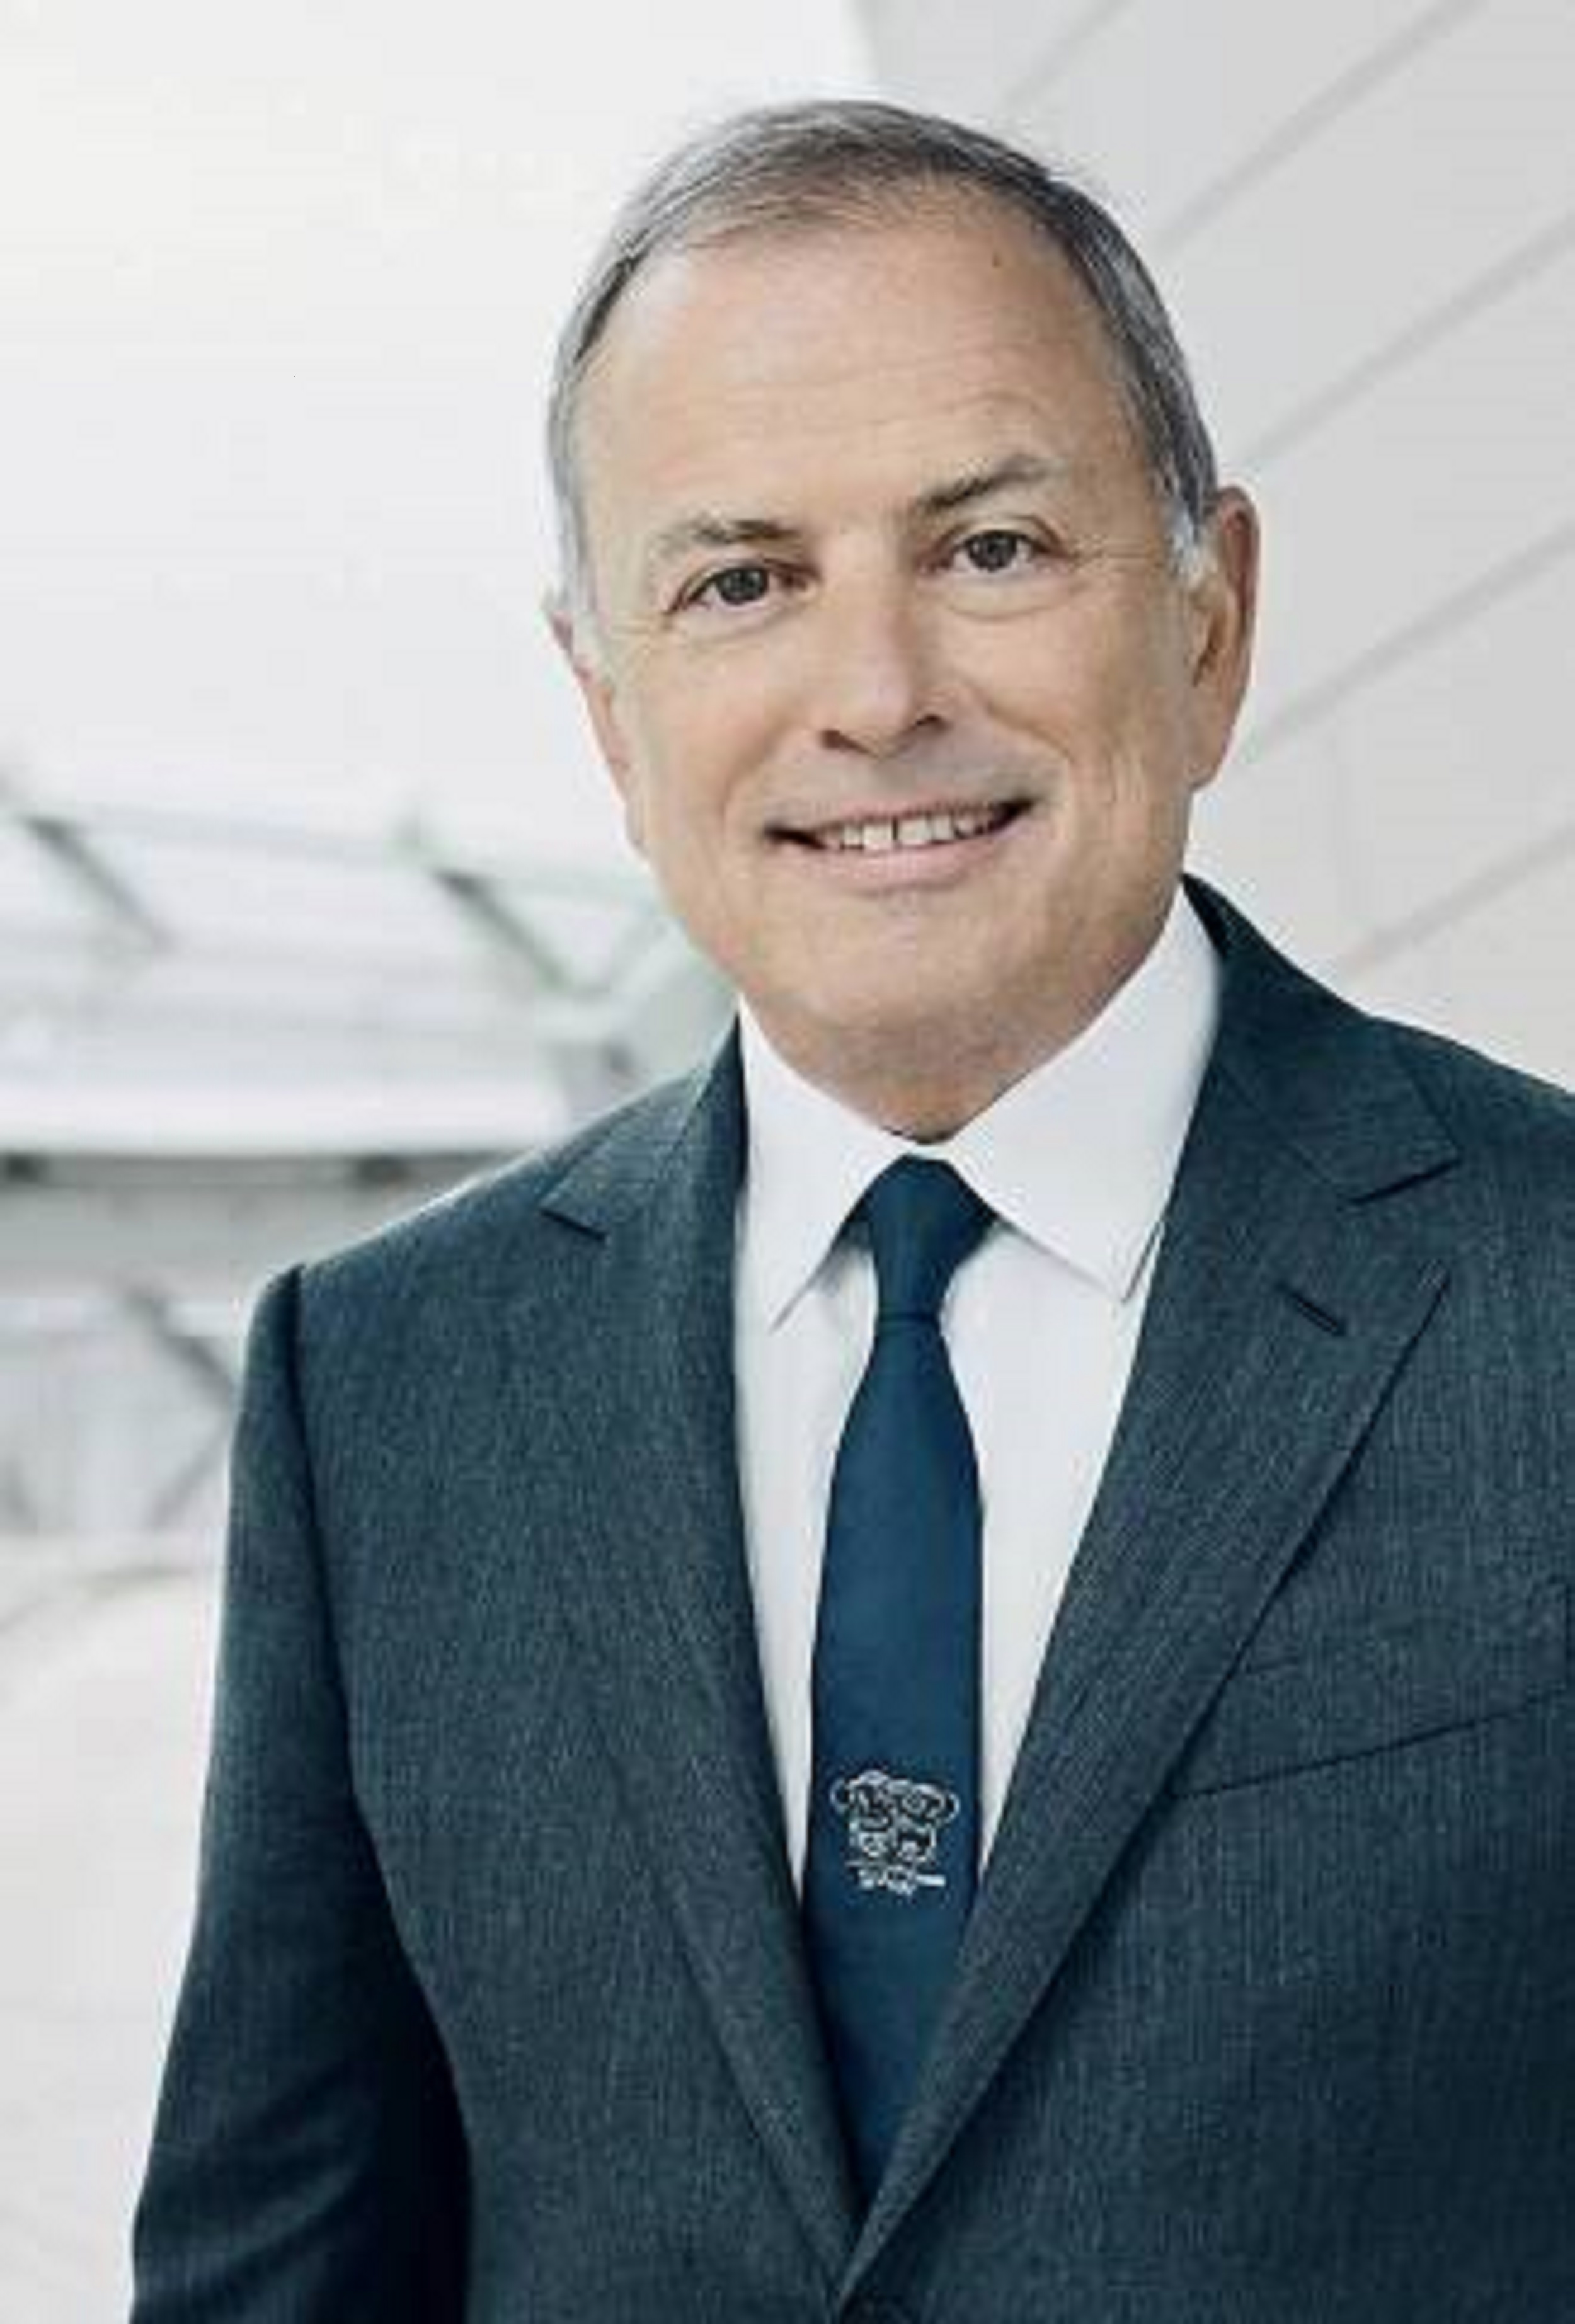 Pietro Beccari, Chairman and CEO of Louis Vuitton